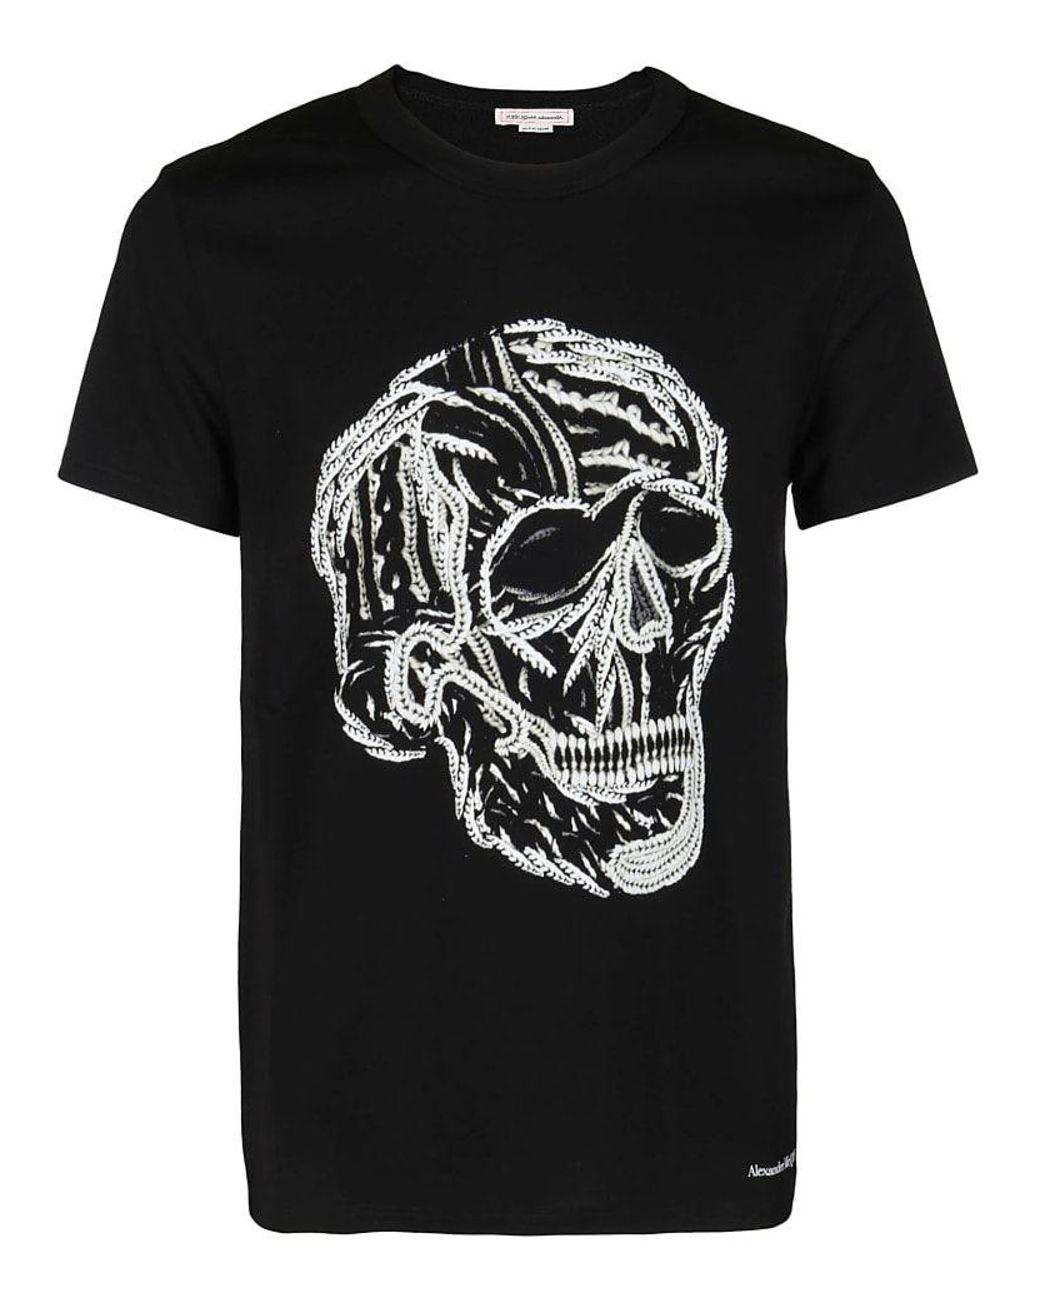 Alexander McQueen Cotton T-shirt in Black for Men - Lyst